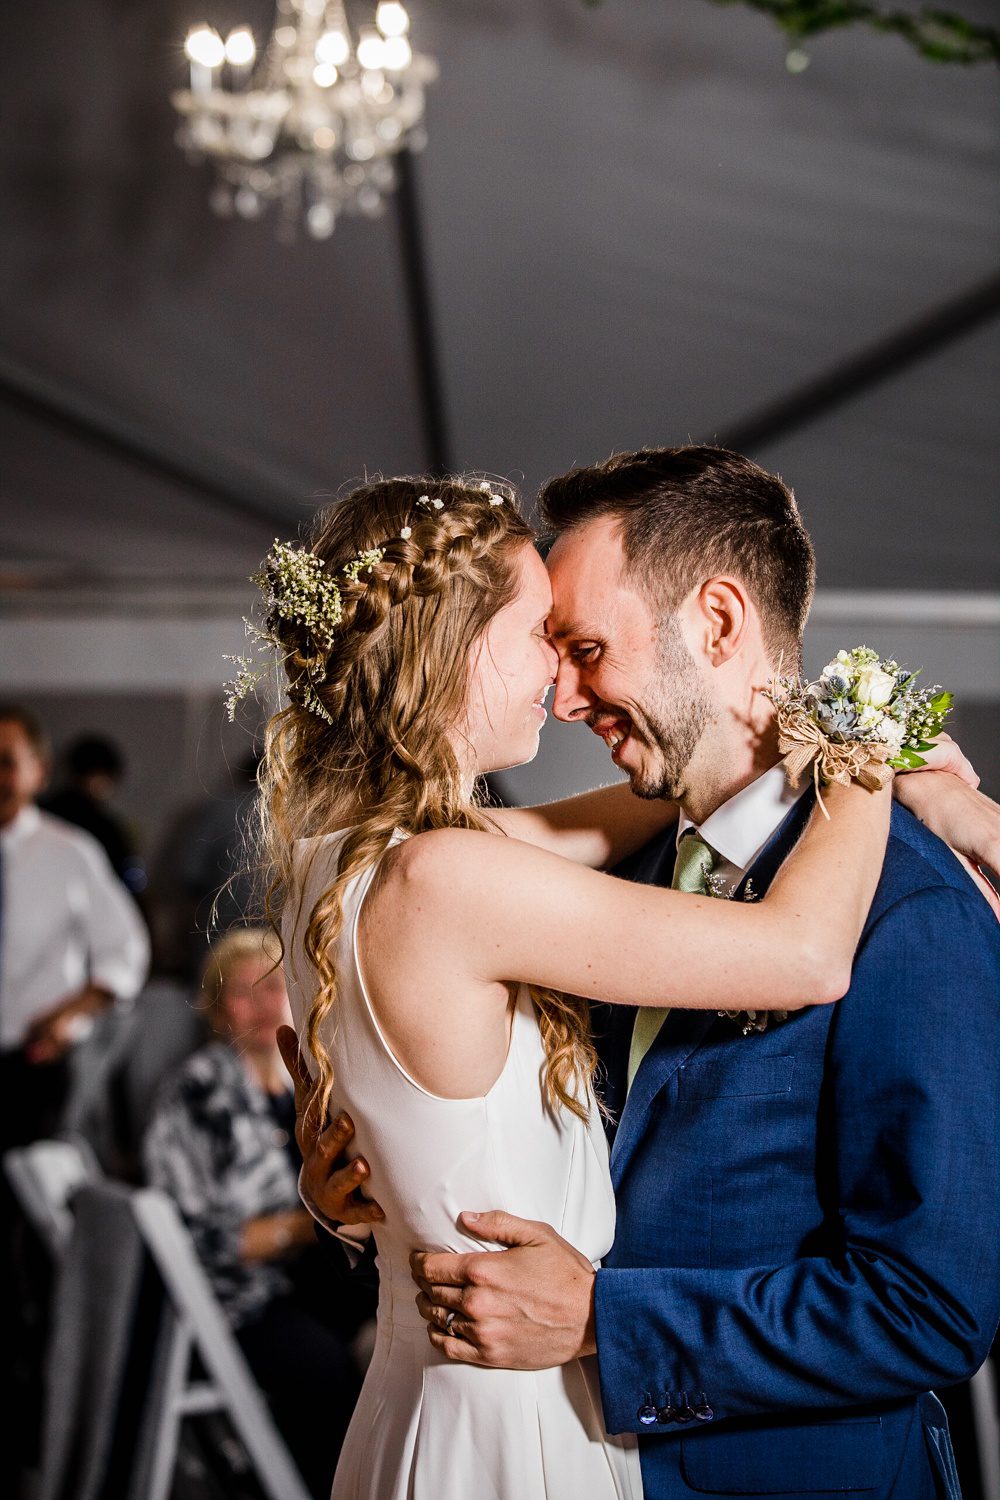 A couple shares their first dance at an Illinois Beach Resort wedding